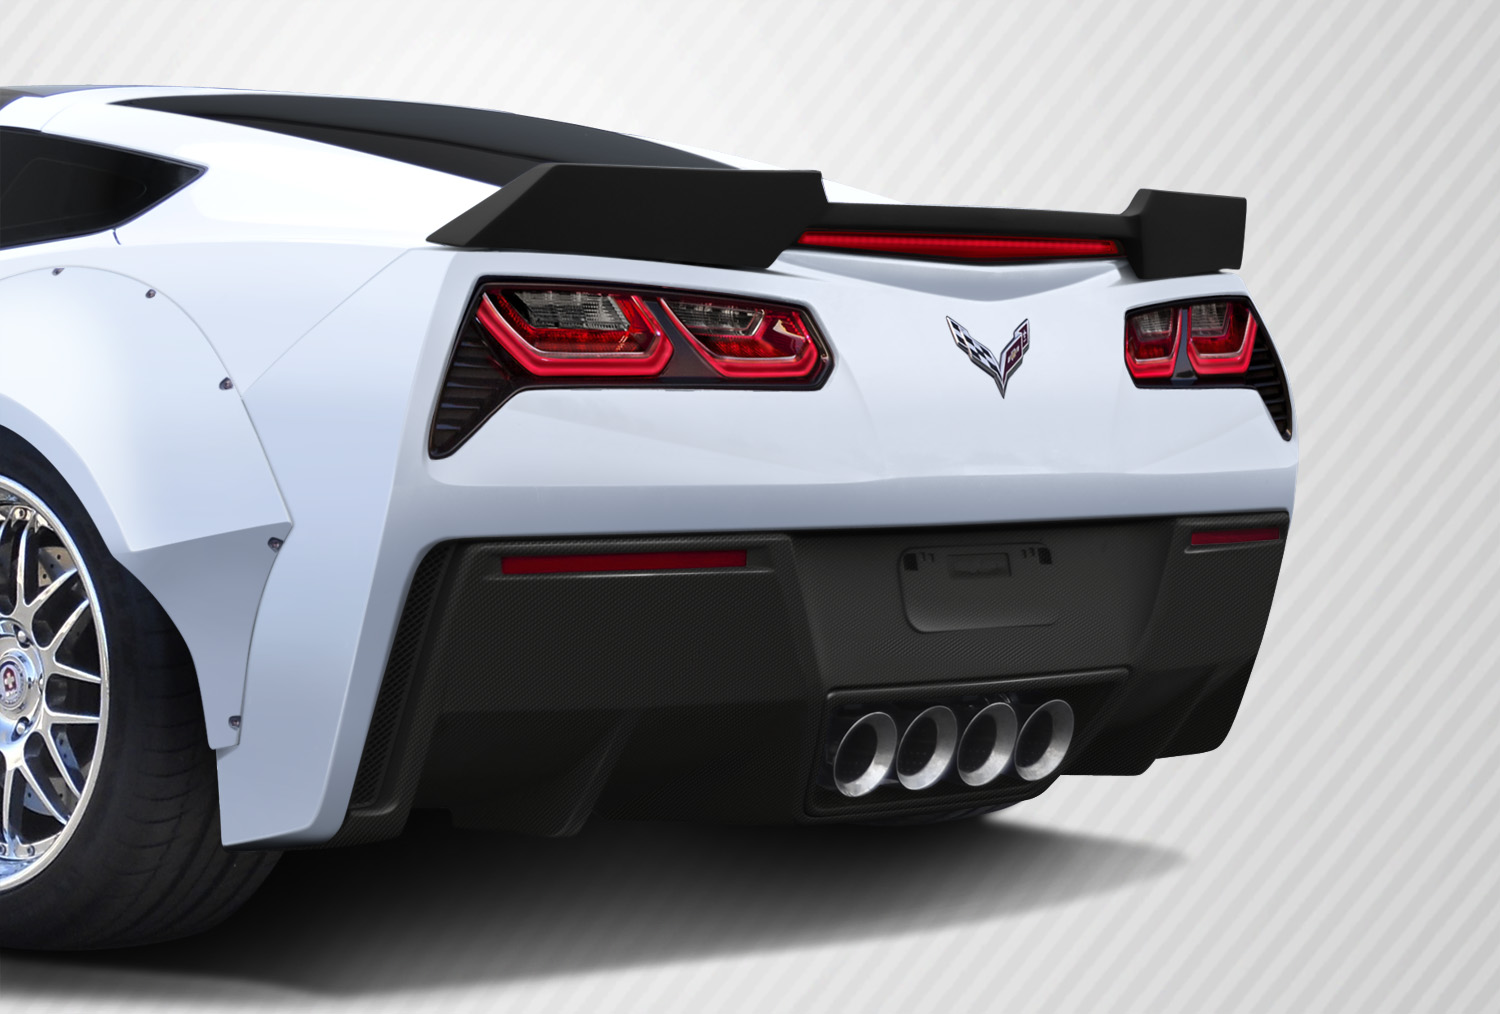 2015 Chevrolet Corvette ALL Rear Lip/Add On Bodykit - Chevrolet Corvette C7 Carbon Creations GT Concept Rear Diffuser - 2 Piece